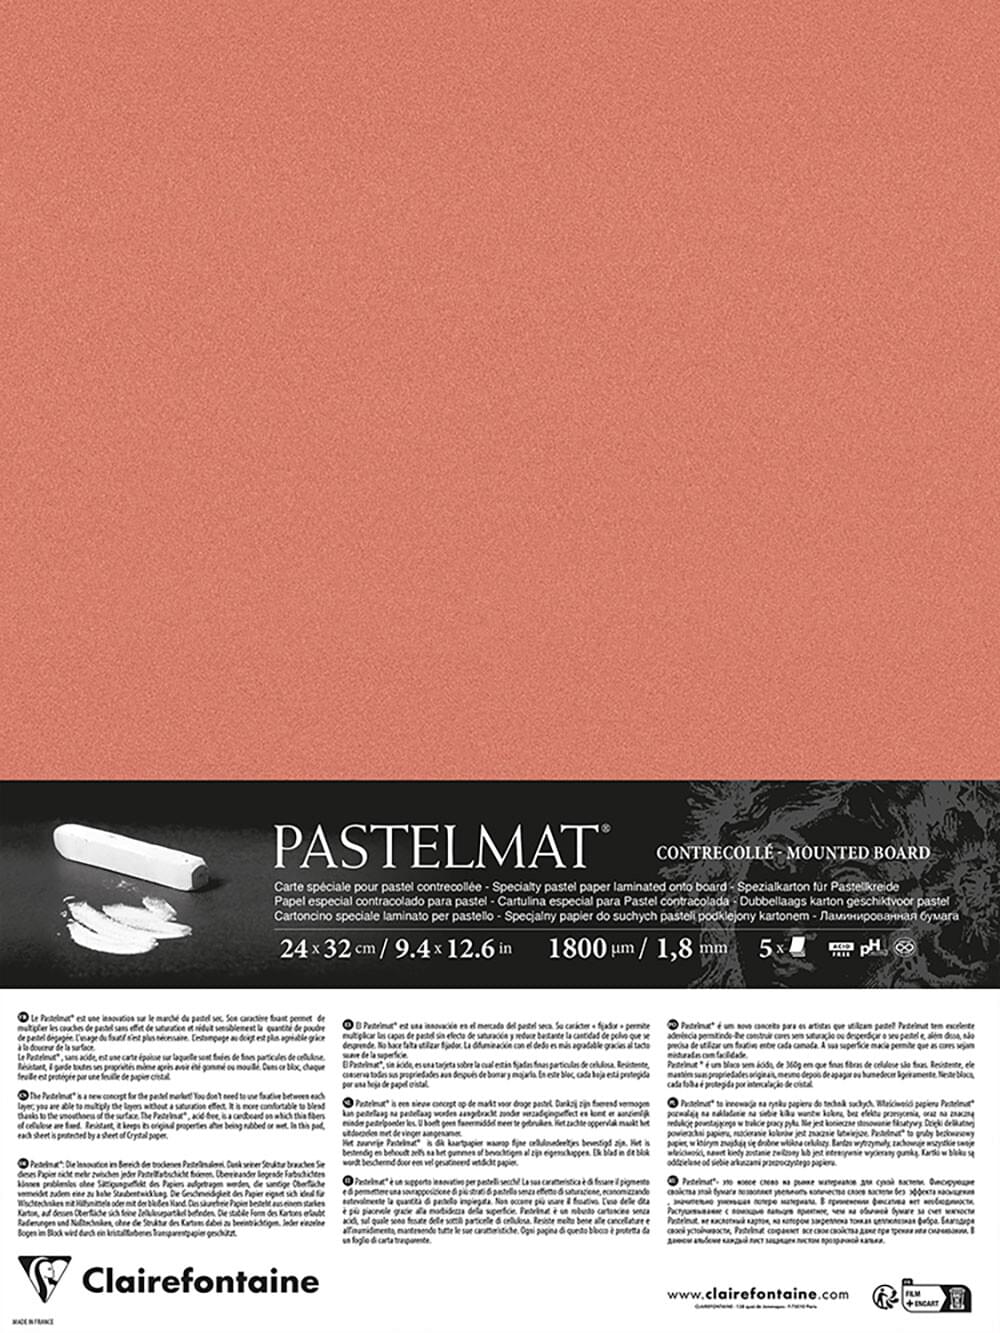 Pastelmat Paper, Pack of 5 (White) - 50x70cm